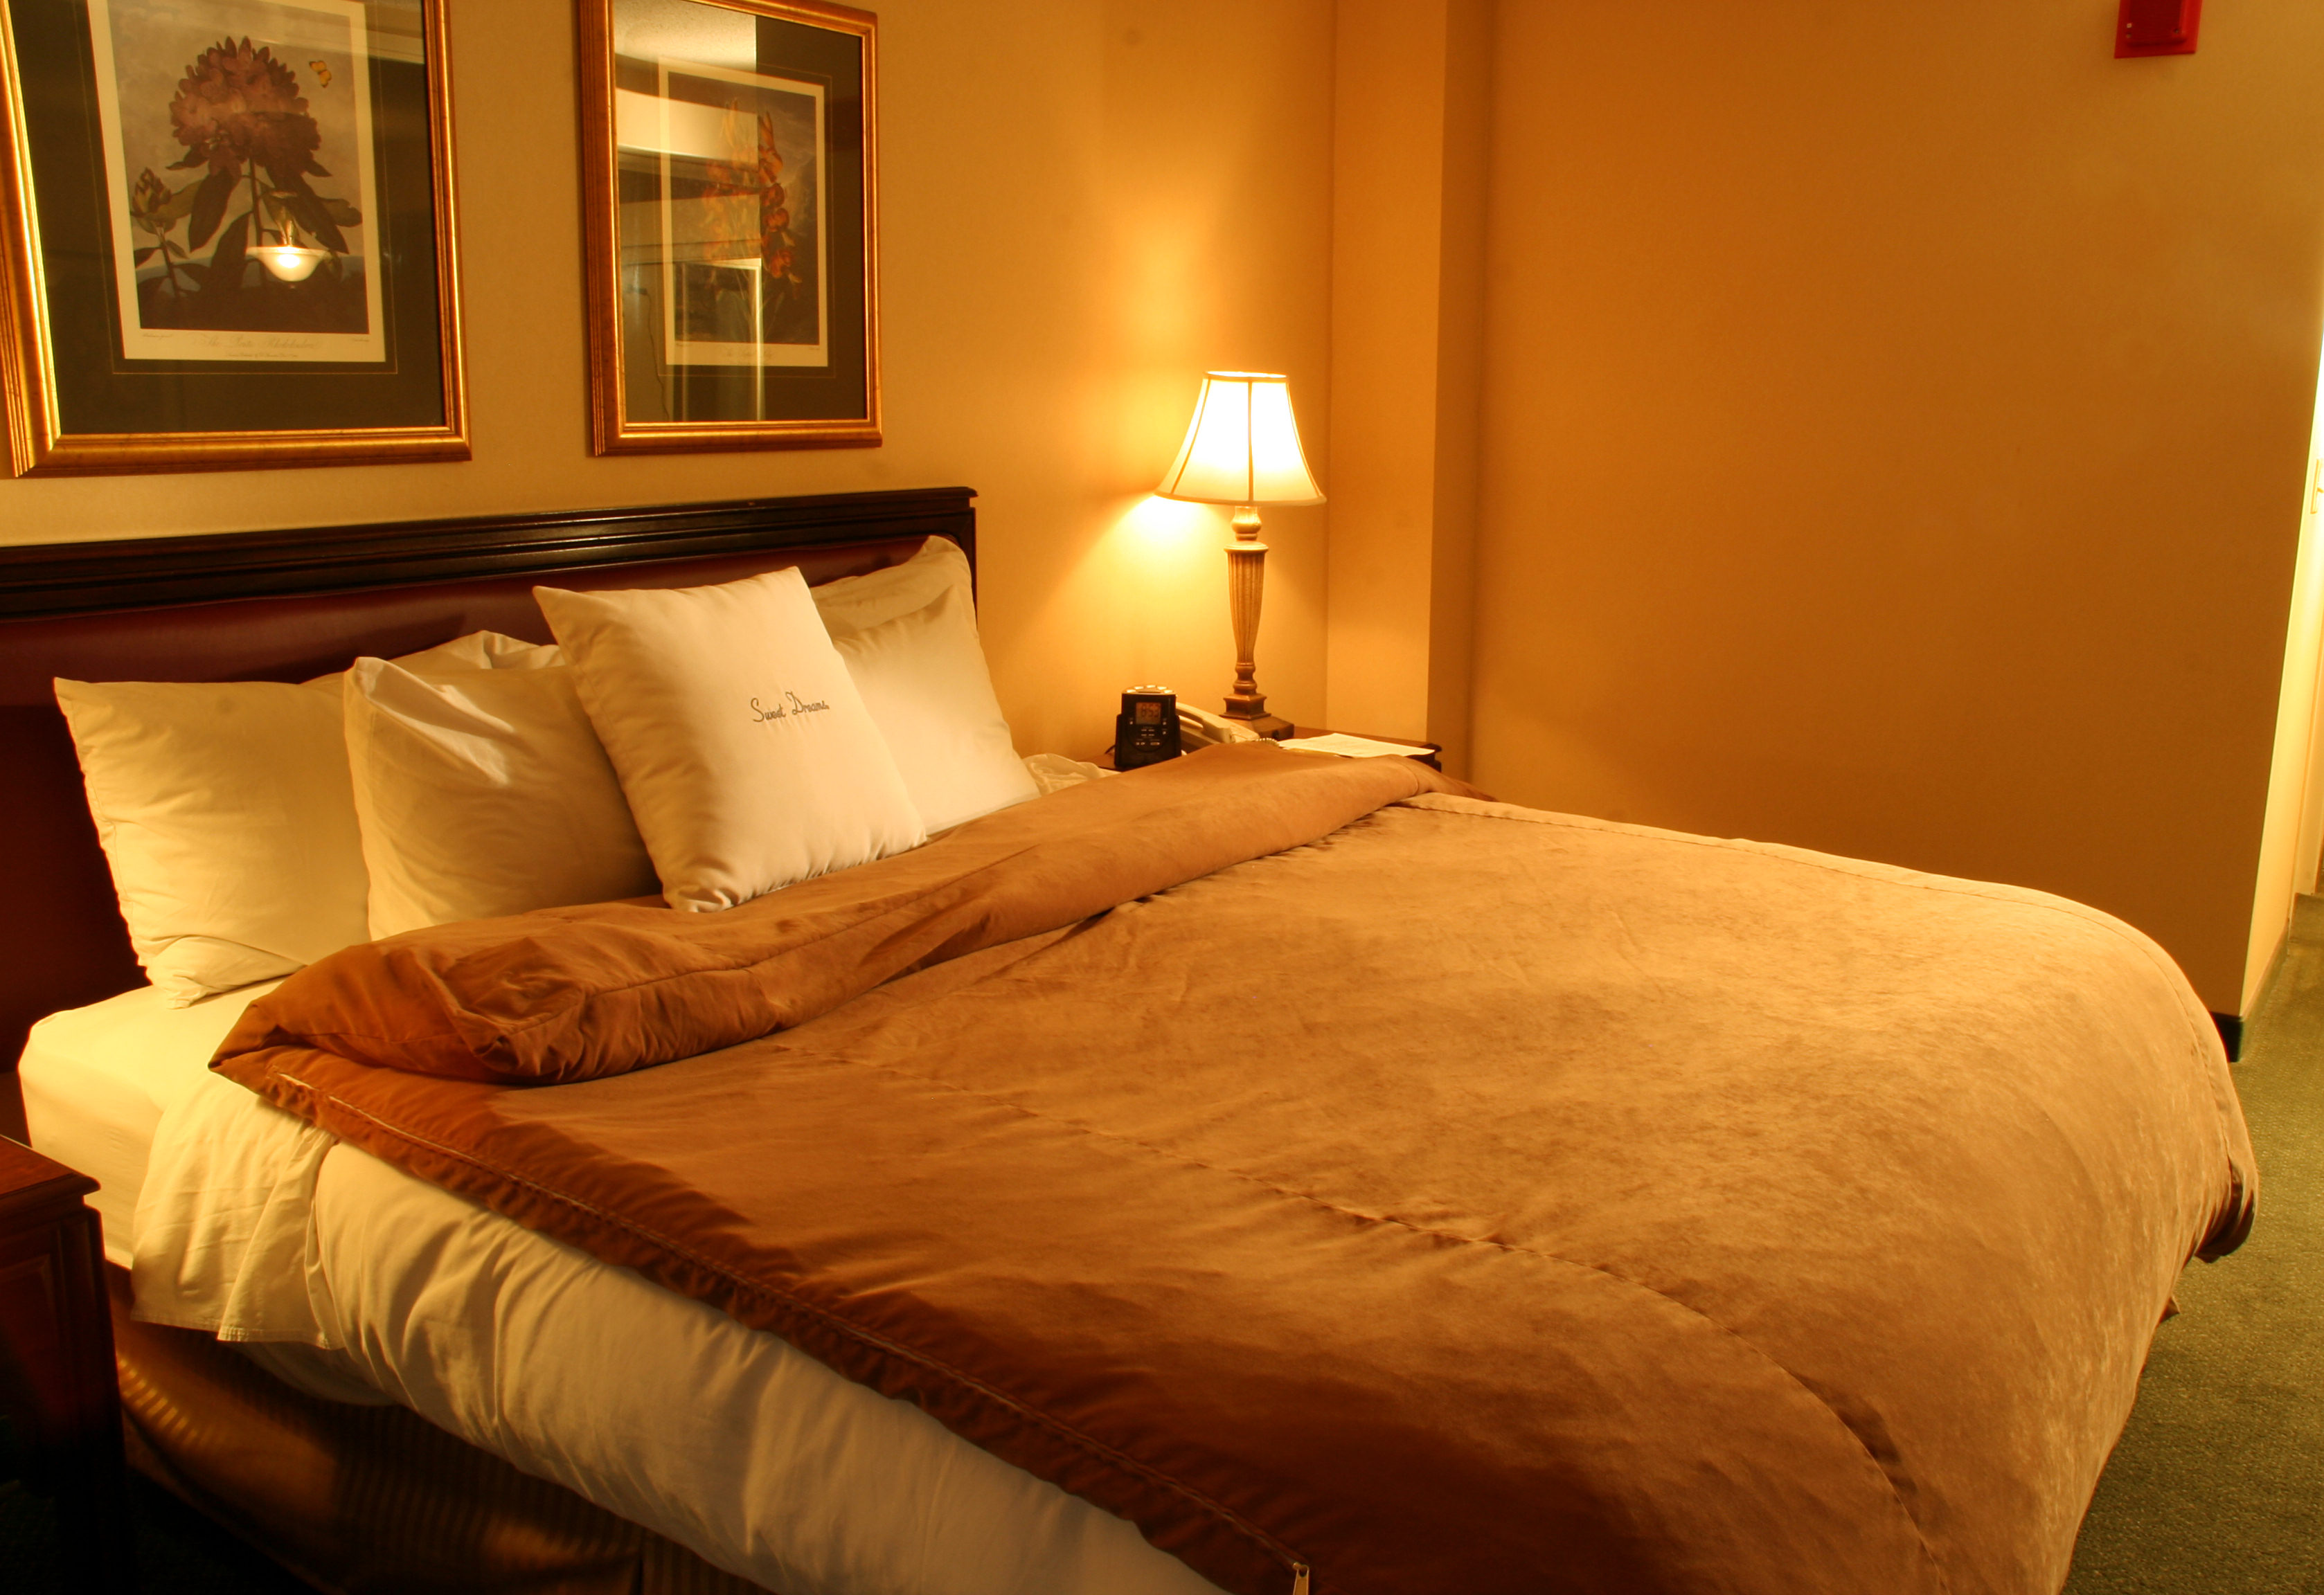 File:Hotel-suite-bedroom.jpg - Wikimedia Commons